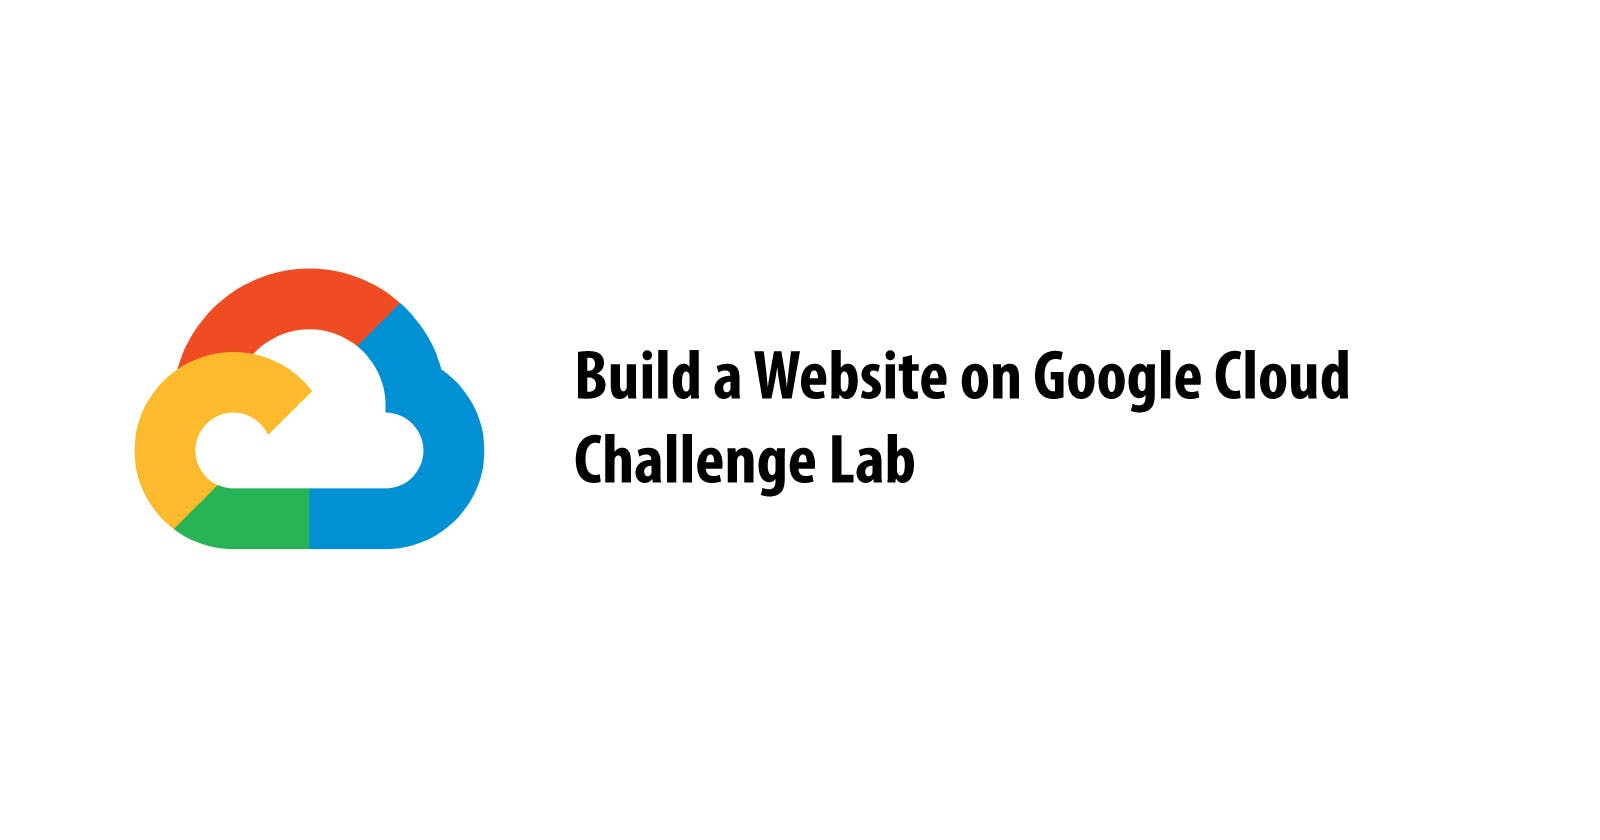 Build a Website on Google Cloud: Challenge Lab